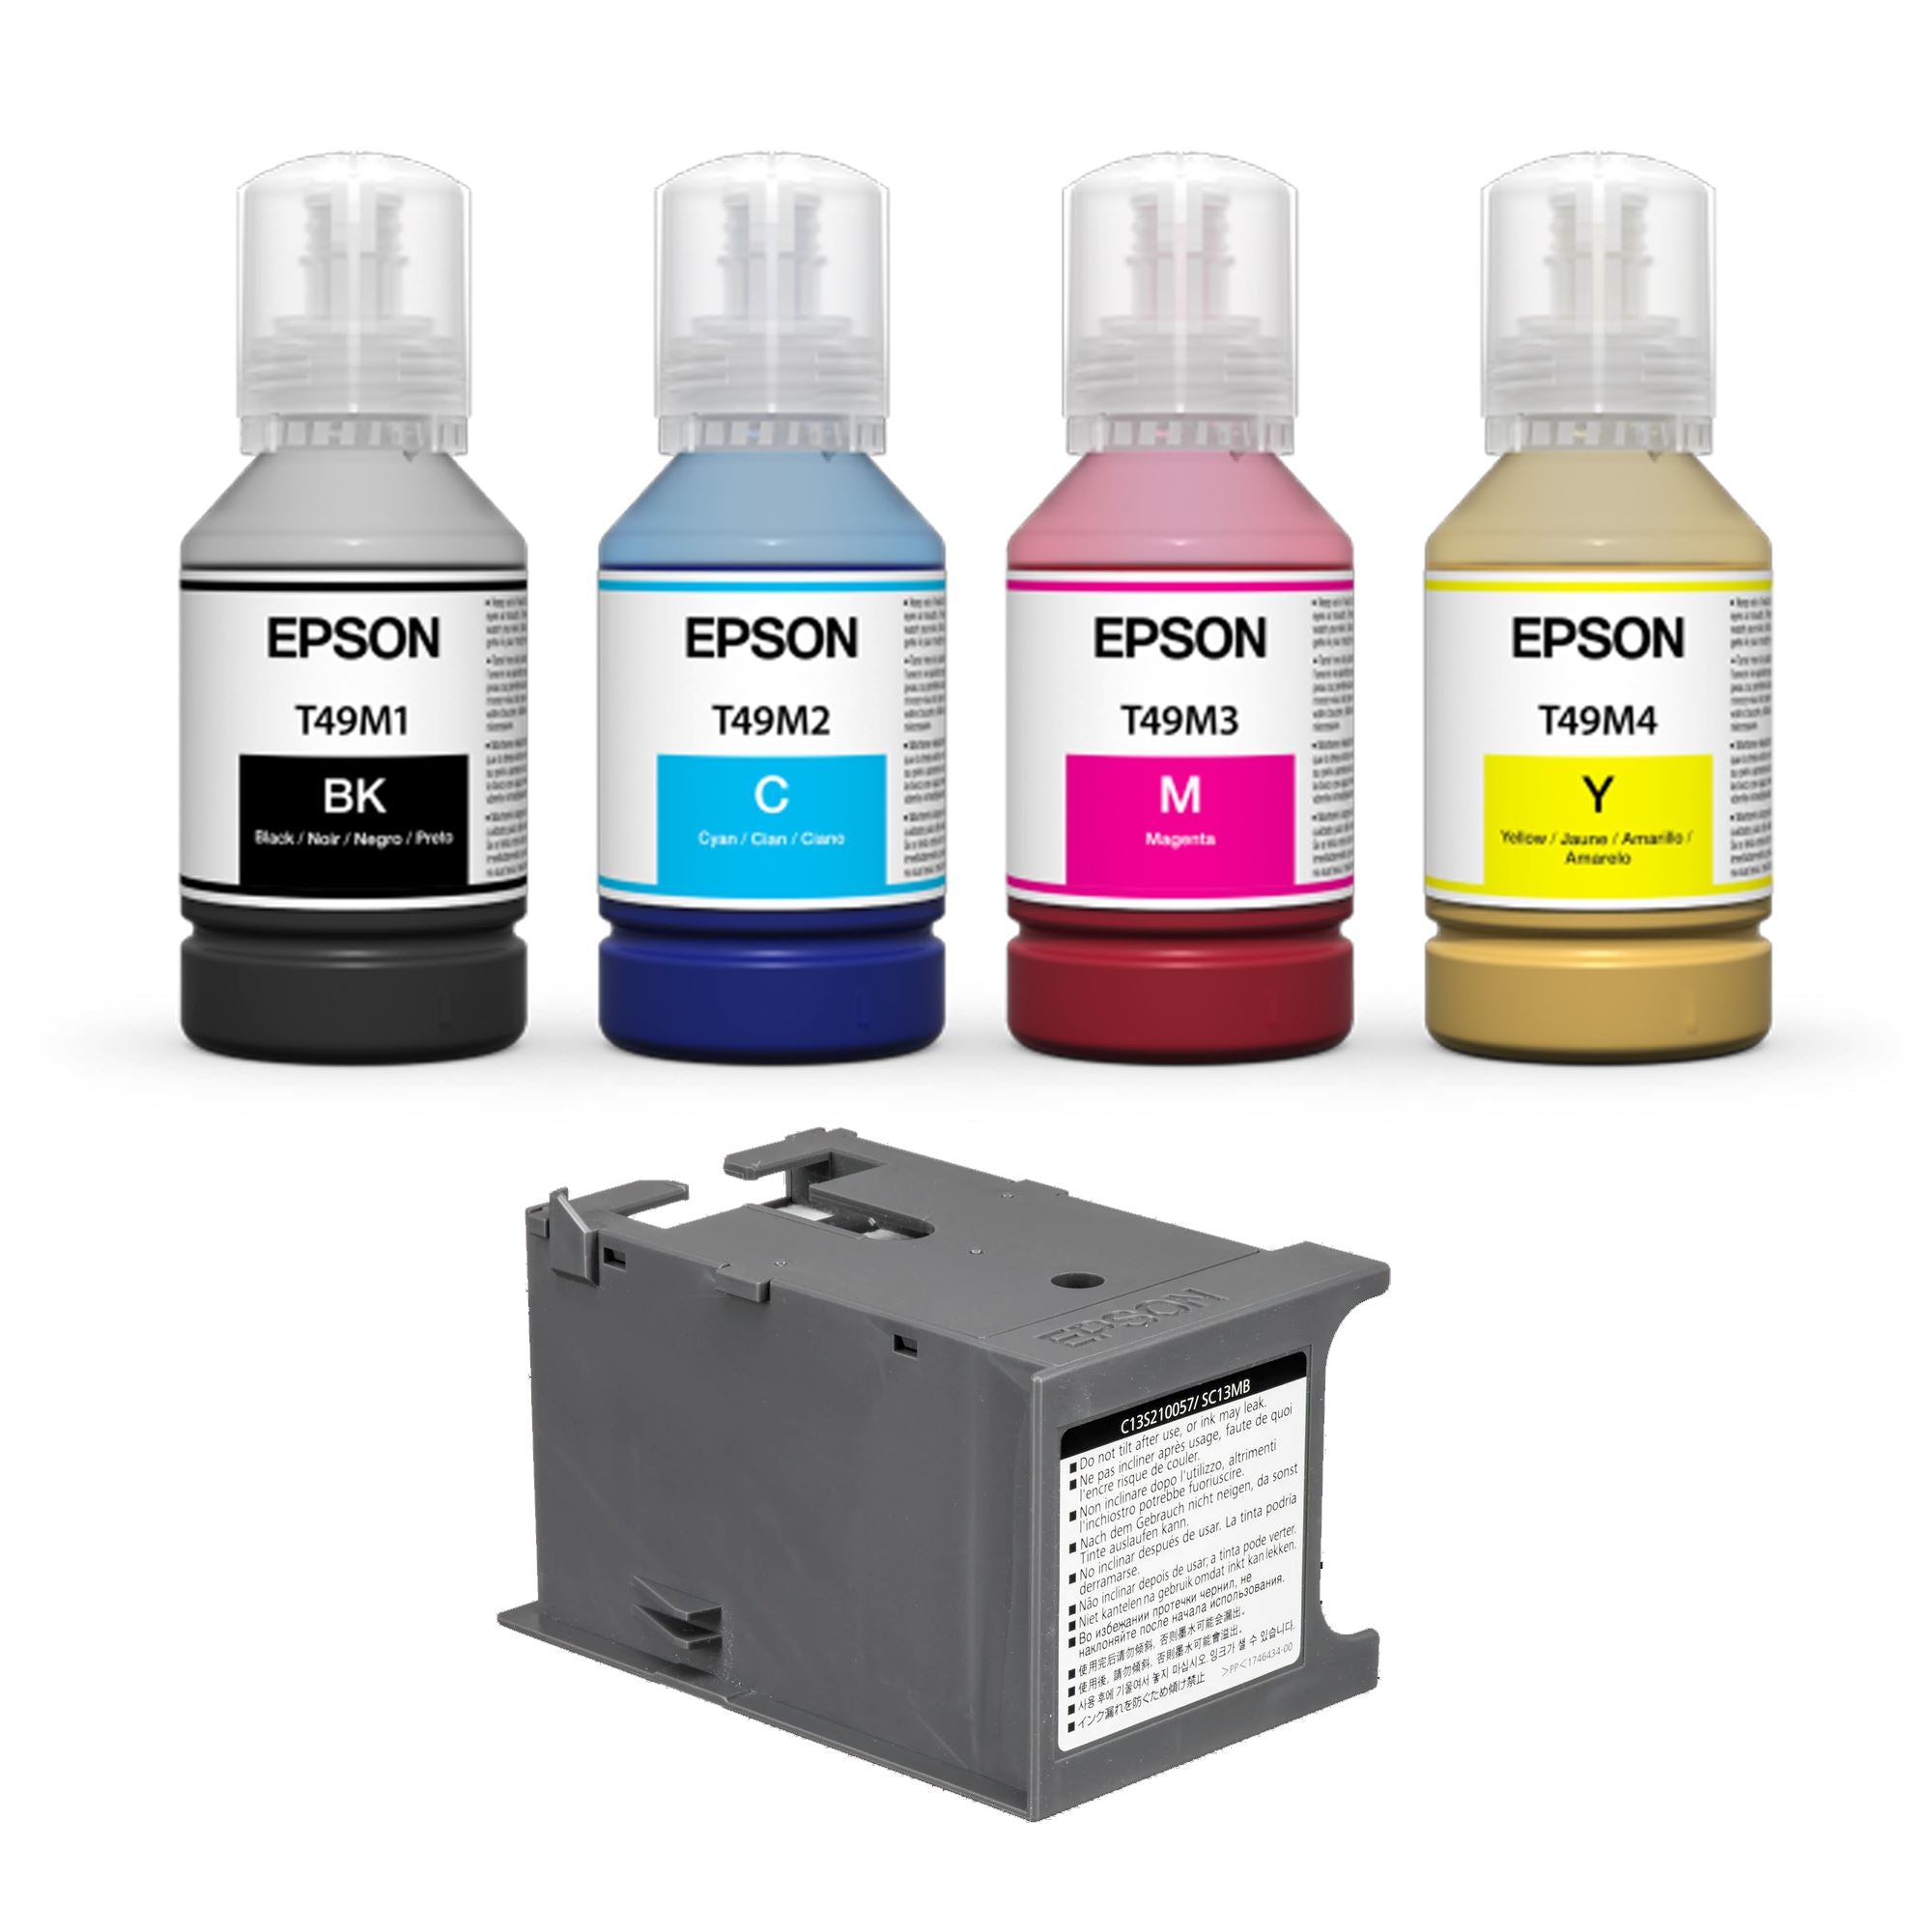 Gek Economisch Ligatie Epson F570 Printer Ink Set Bundle on Sale | Swing Design